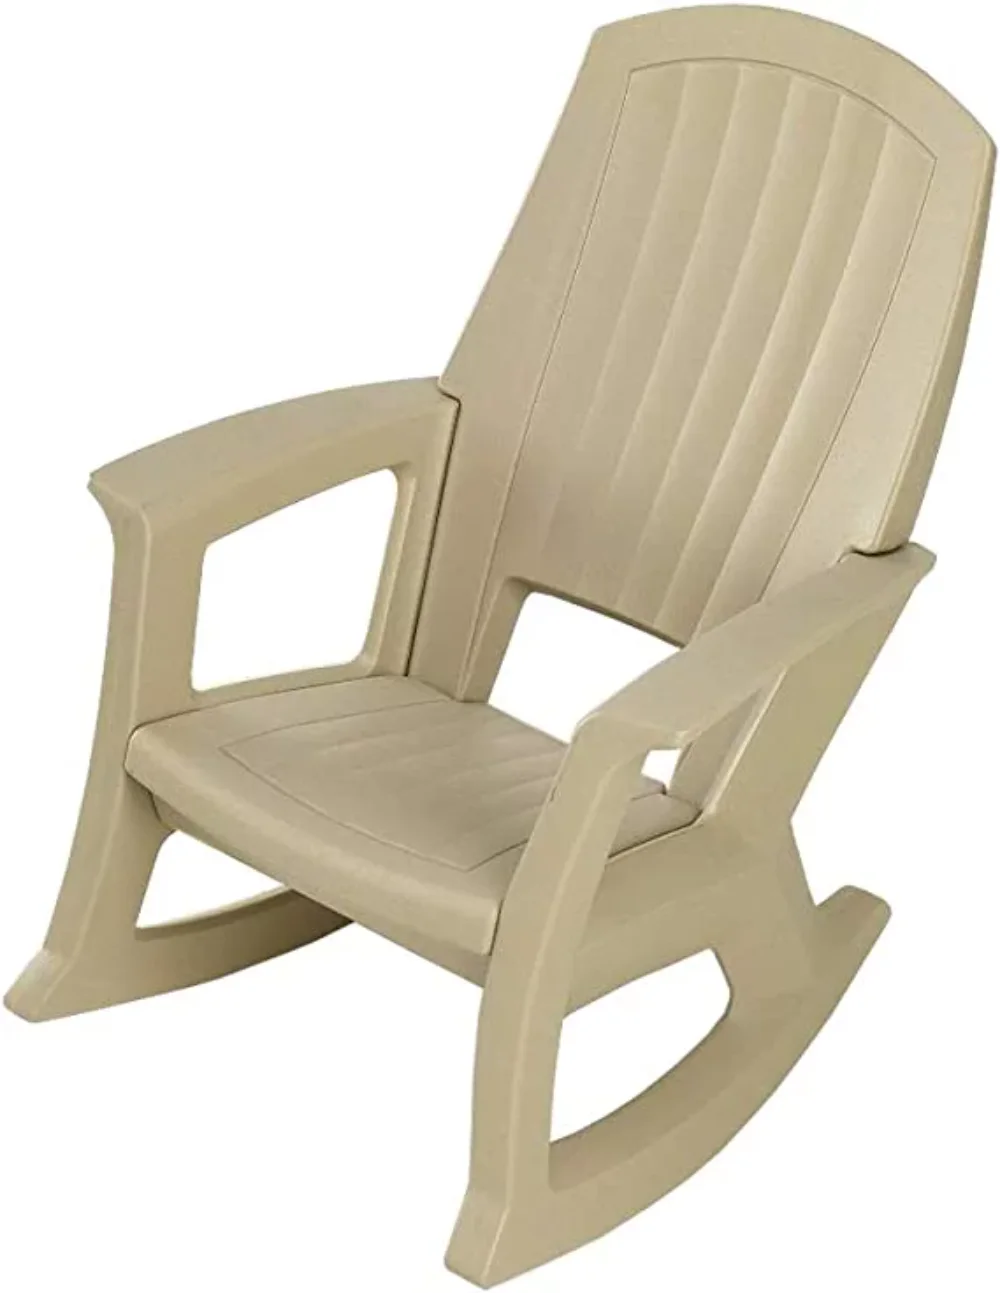 

Rockaway Heavy Duty All-Weather Outdoor Rocking Chair by Semco Plastics - Sand Tan